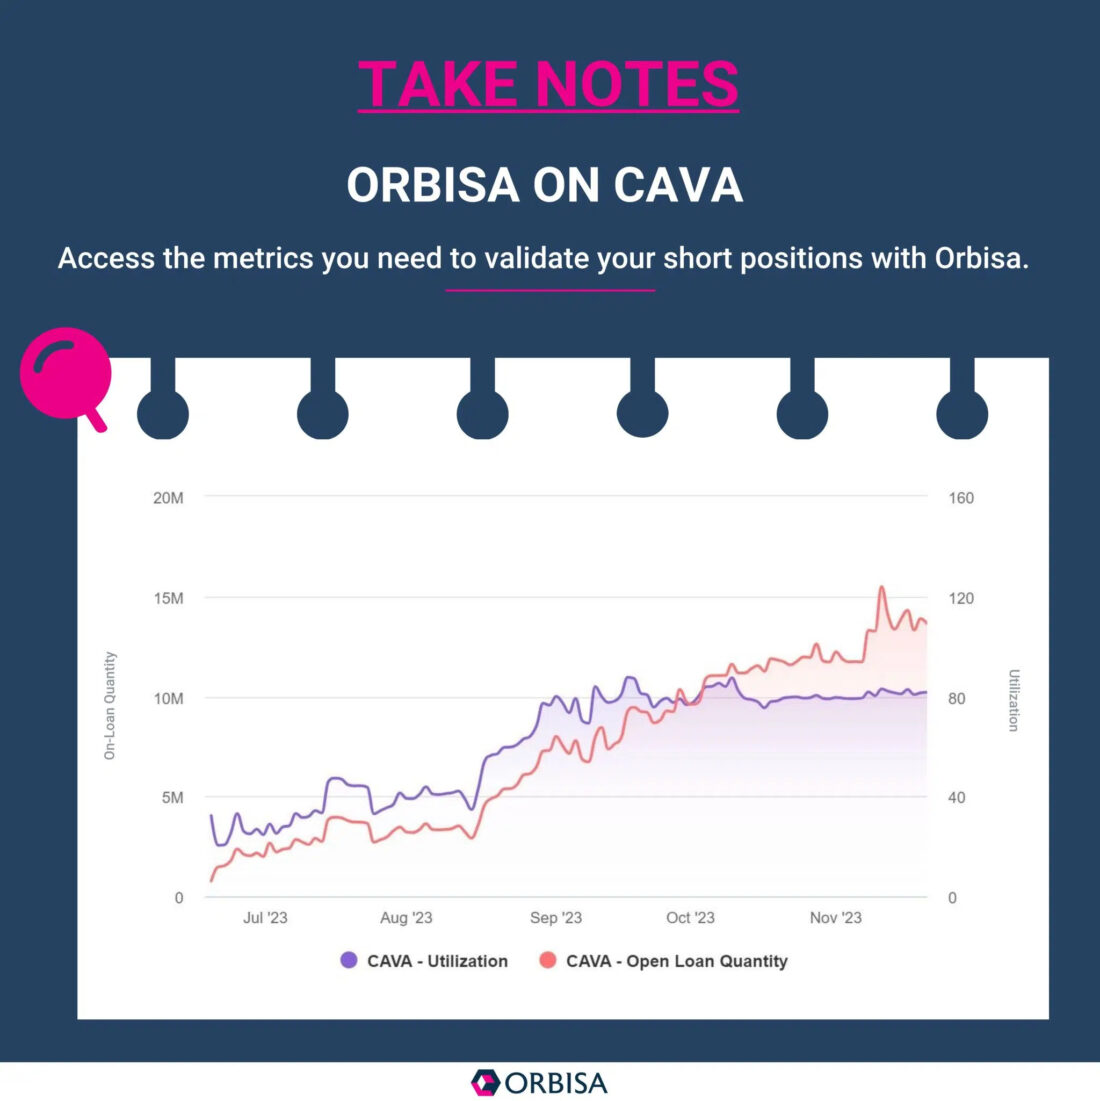 Orbisa insights dives into Cava Group (CAVA), operators of the popular fast-casual Mediterranean restaurant chain